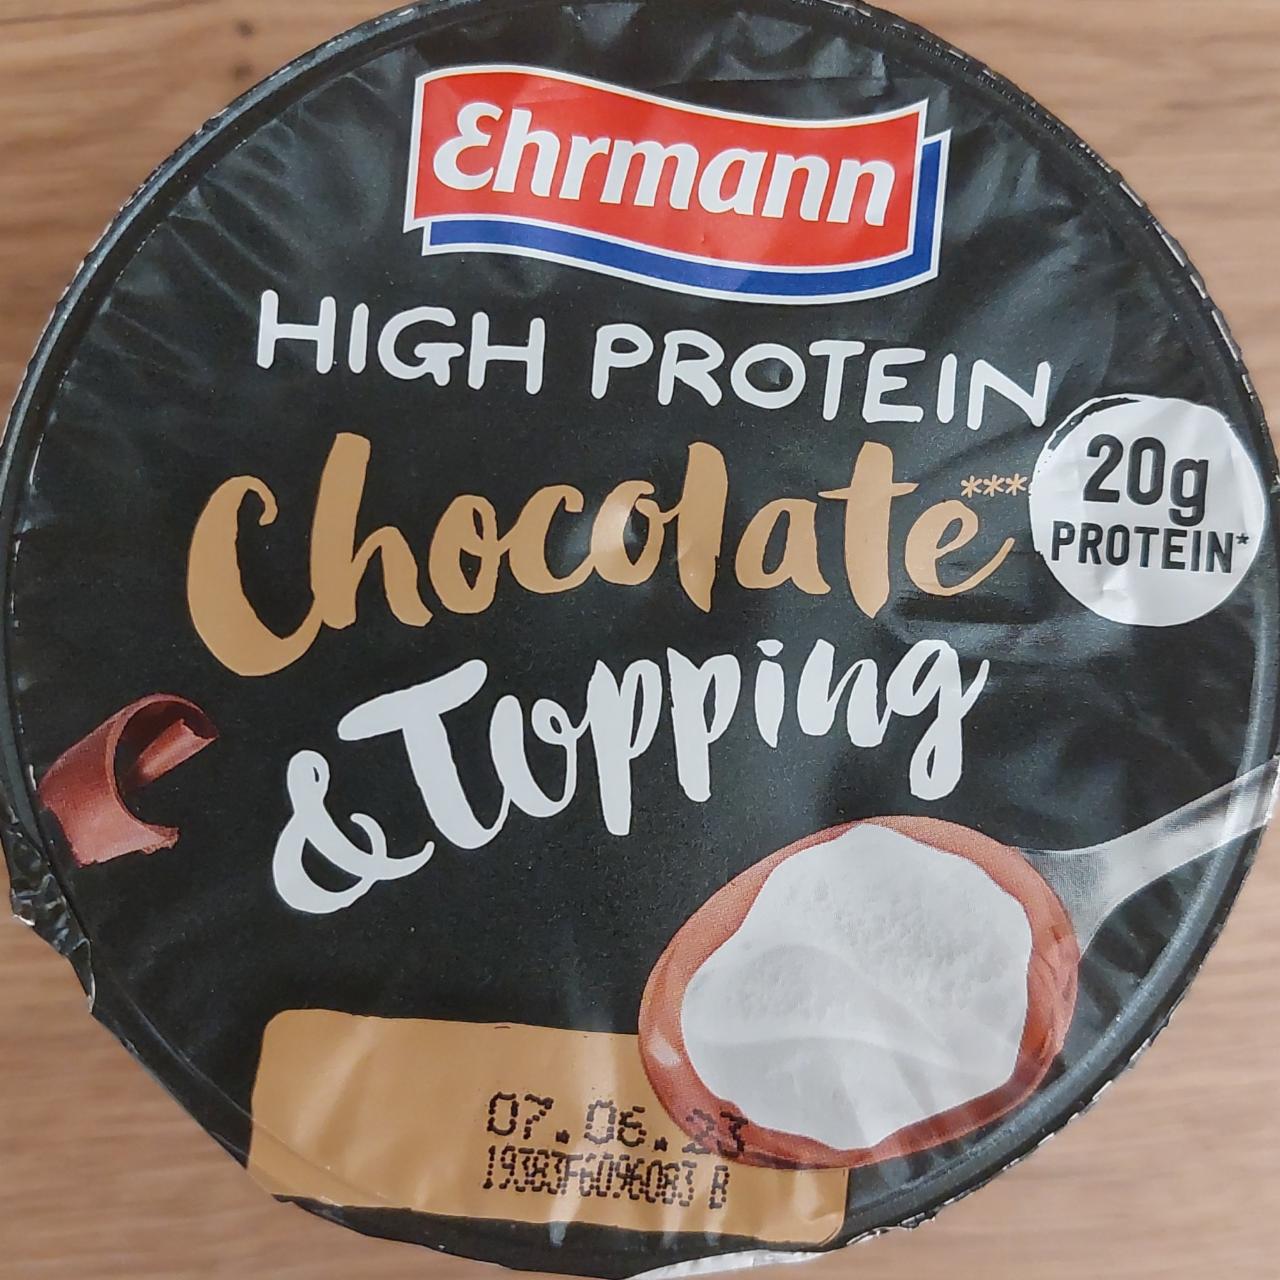 Fotografie - High Protein Chocolate & Topping Ehrmann